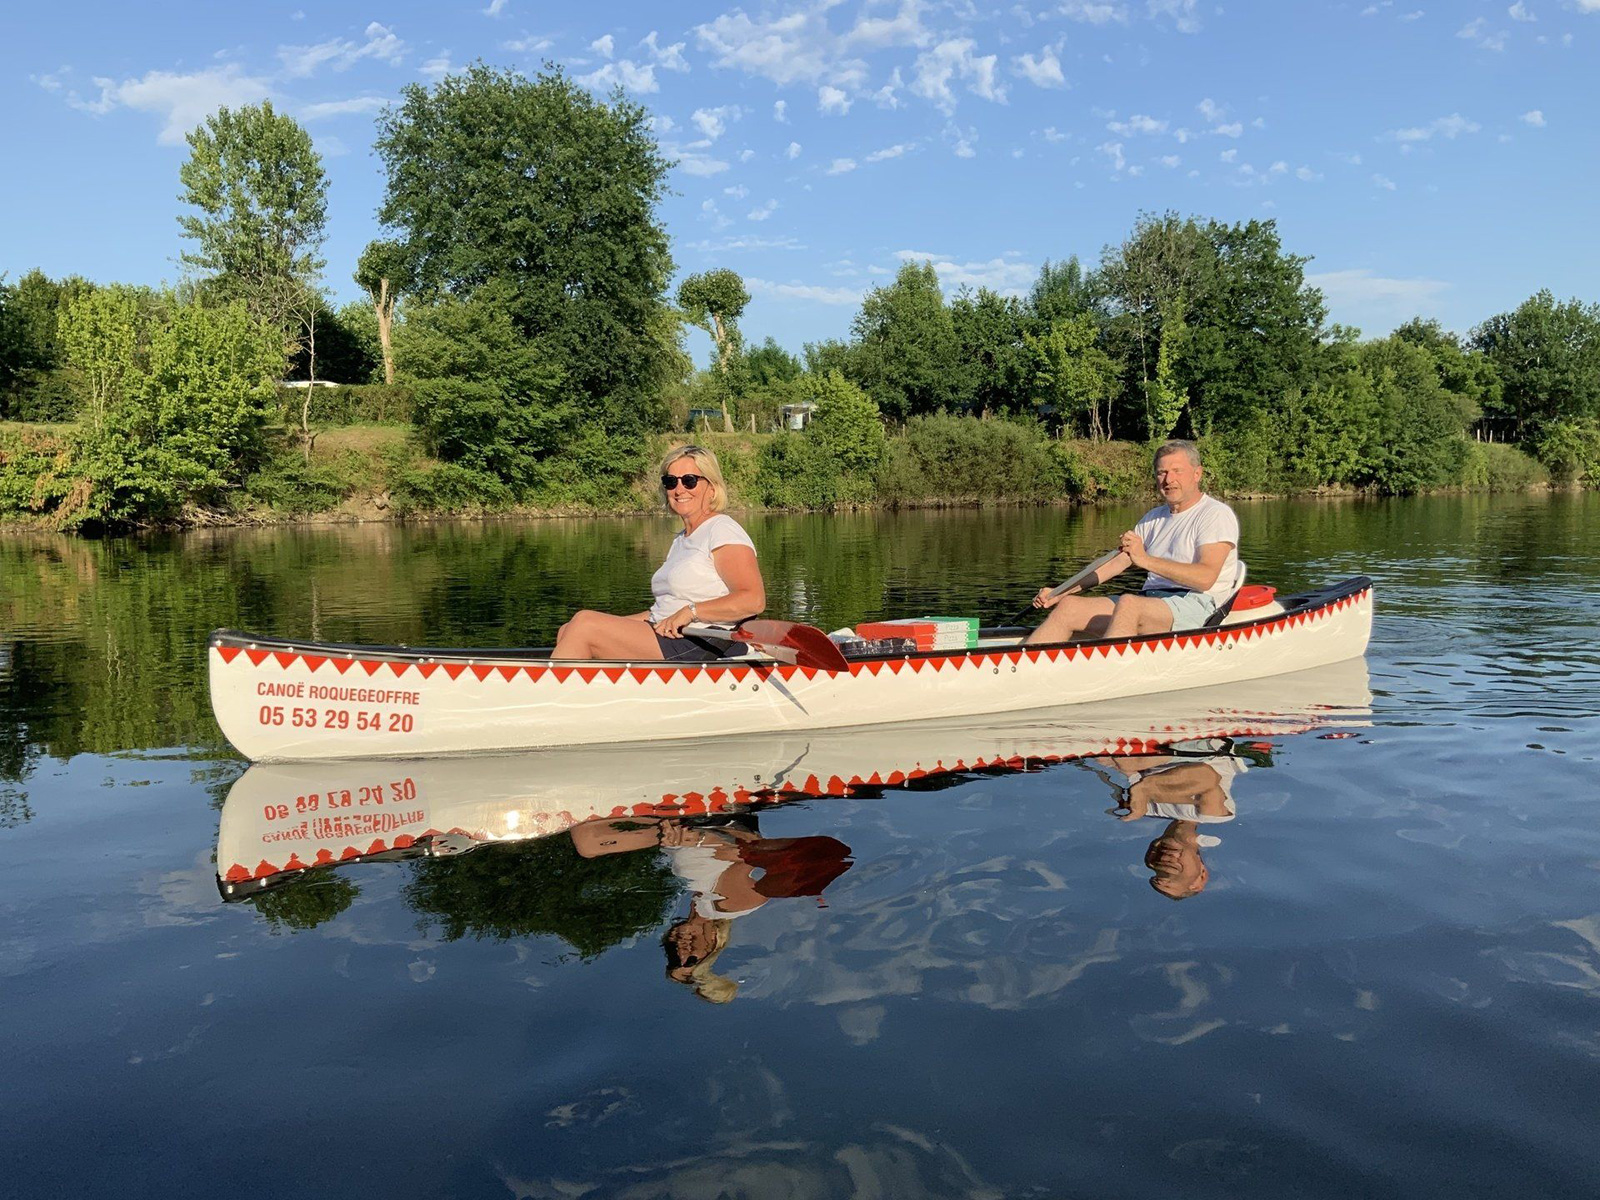 Canoe Roquegeoffre